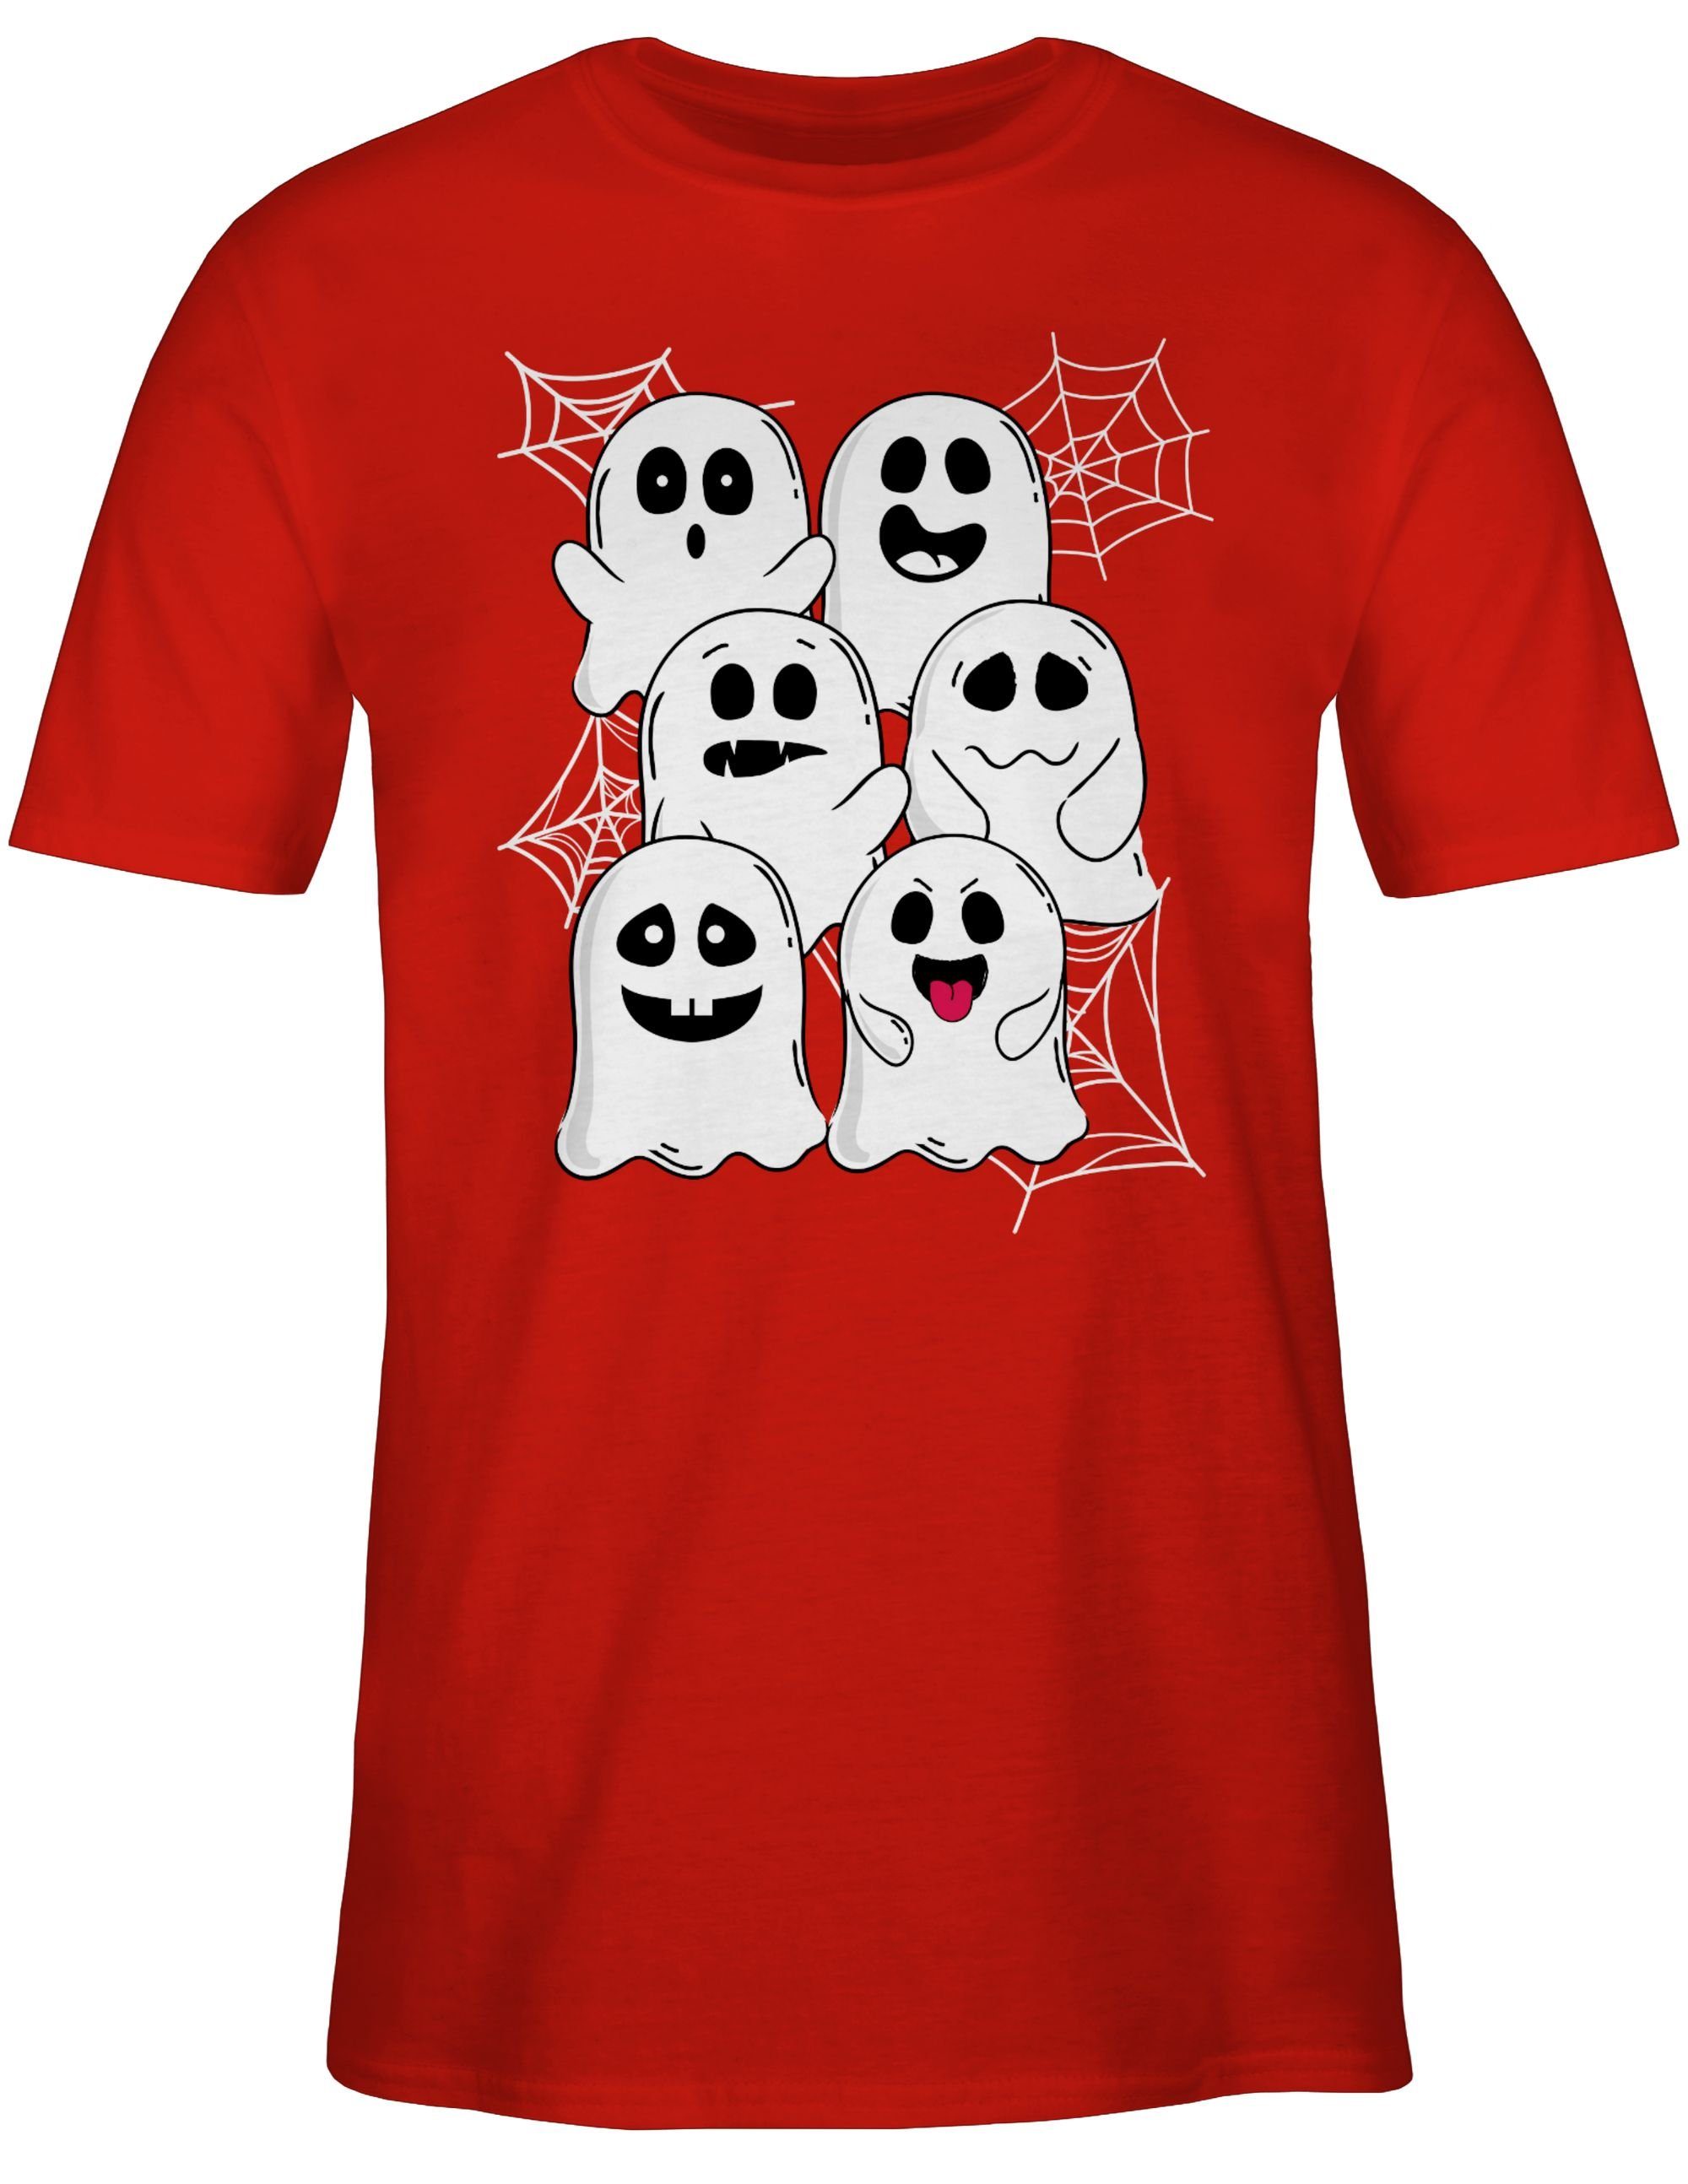 Gespenst Lustige Halloween Rot 03 Shirtracer Herren Kostüme Geist Gespenster T-Shirt Geister